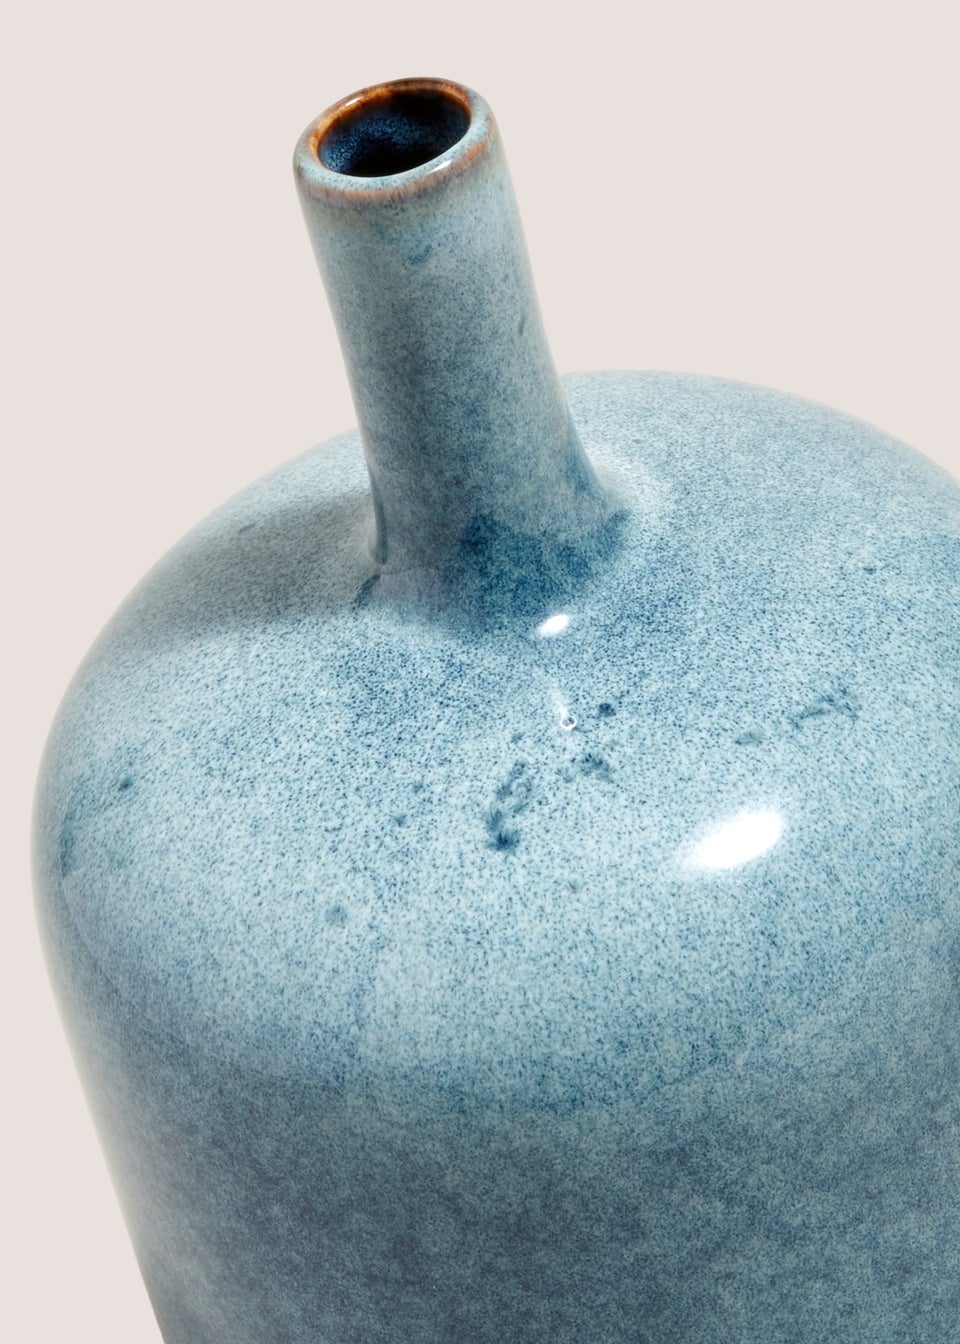 Blue Long Stem Glaze Vase (24.1cm x 12.4cm x 12.4cm)